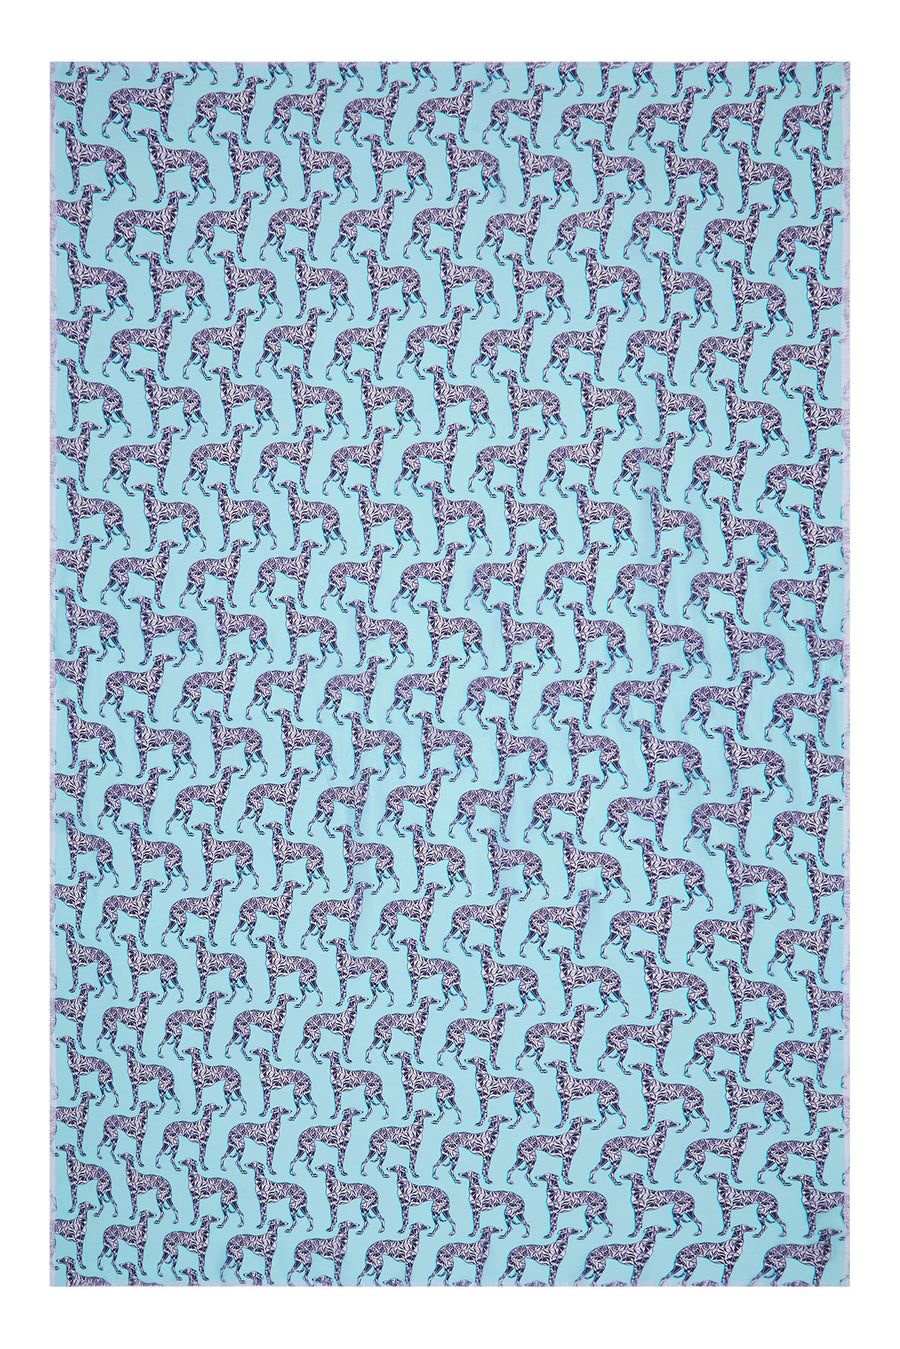 Luxury frayed edge silk sarong in Lurcher dog aubergine & pale blue print by designer Lotty B Mustique